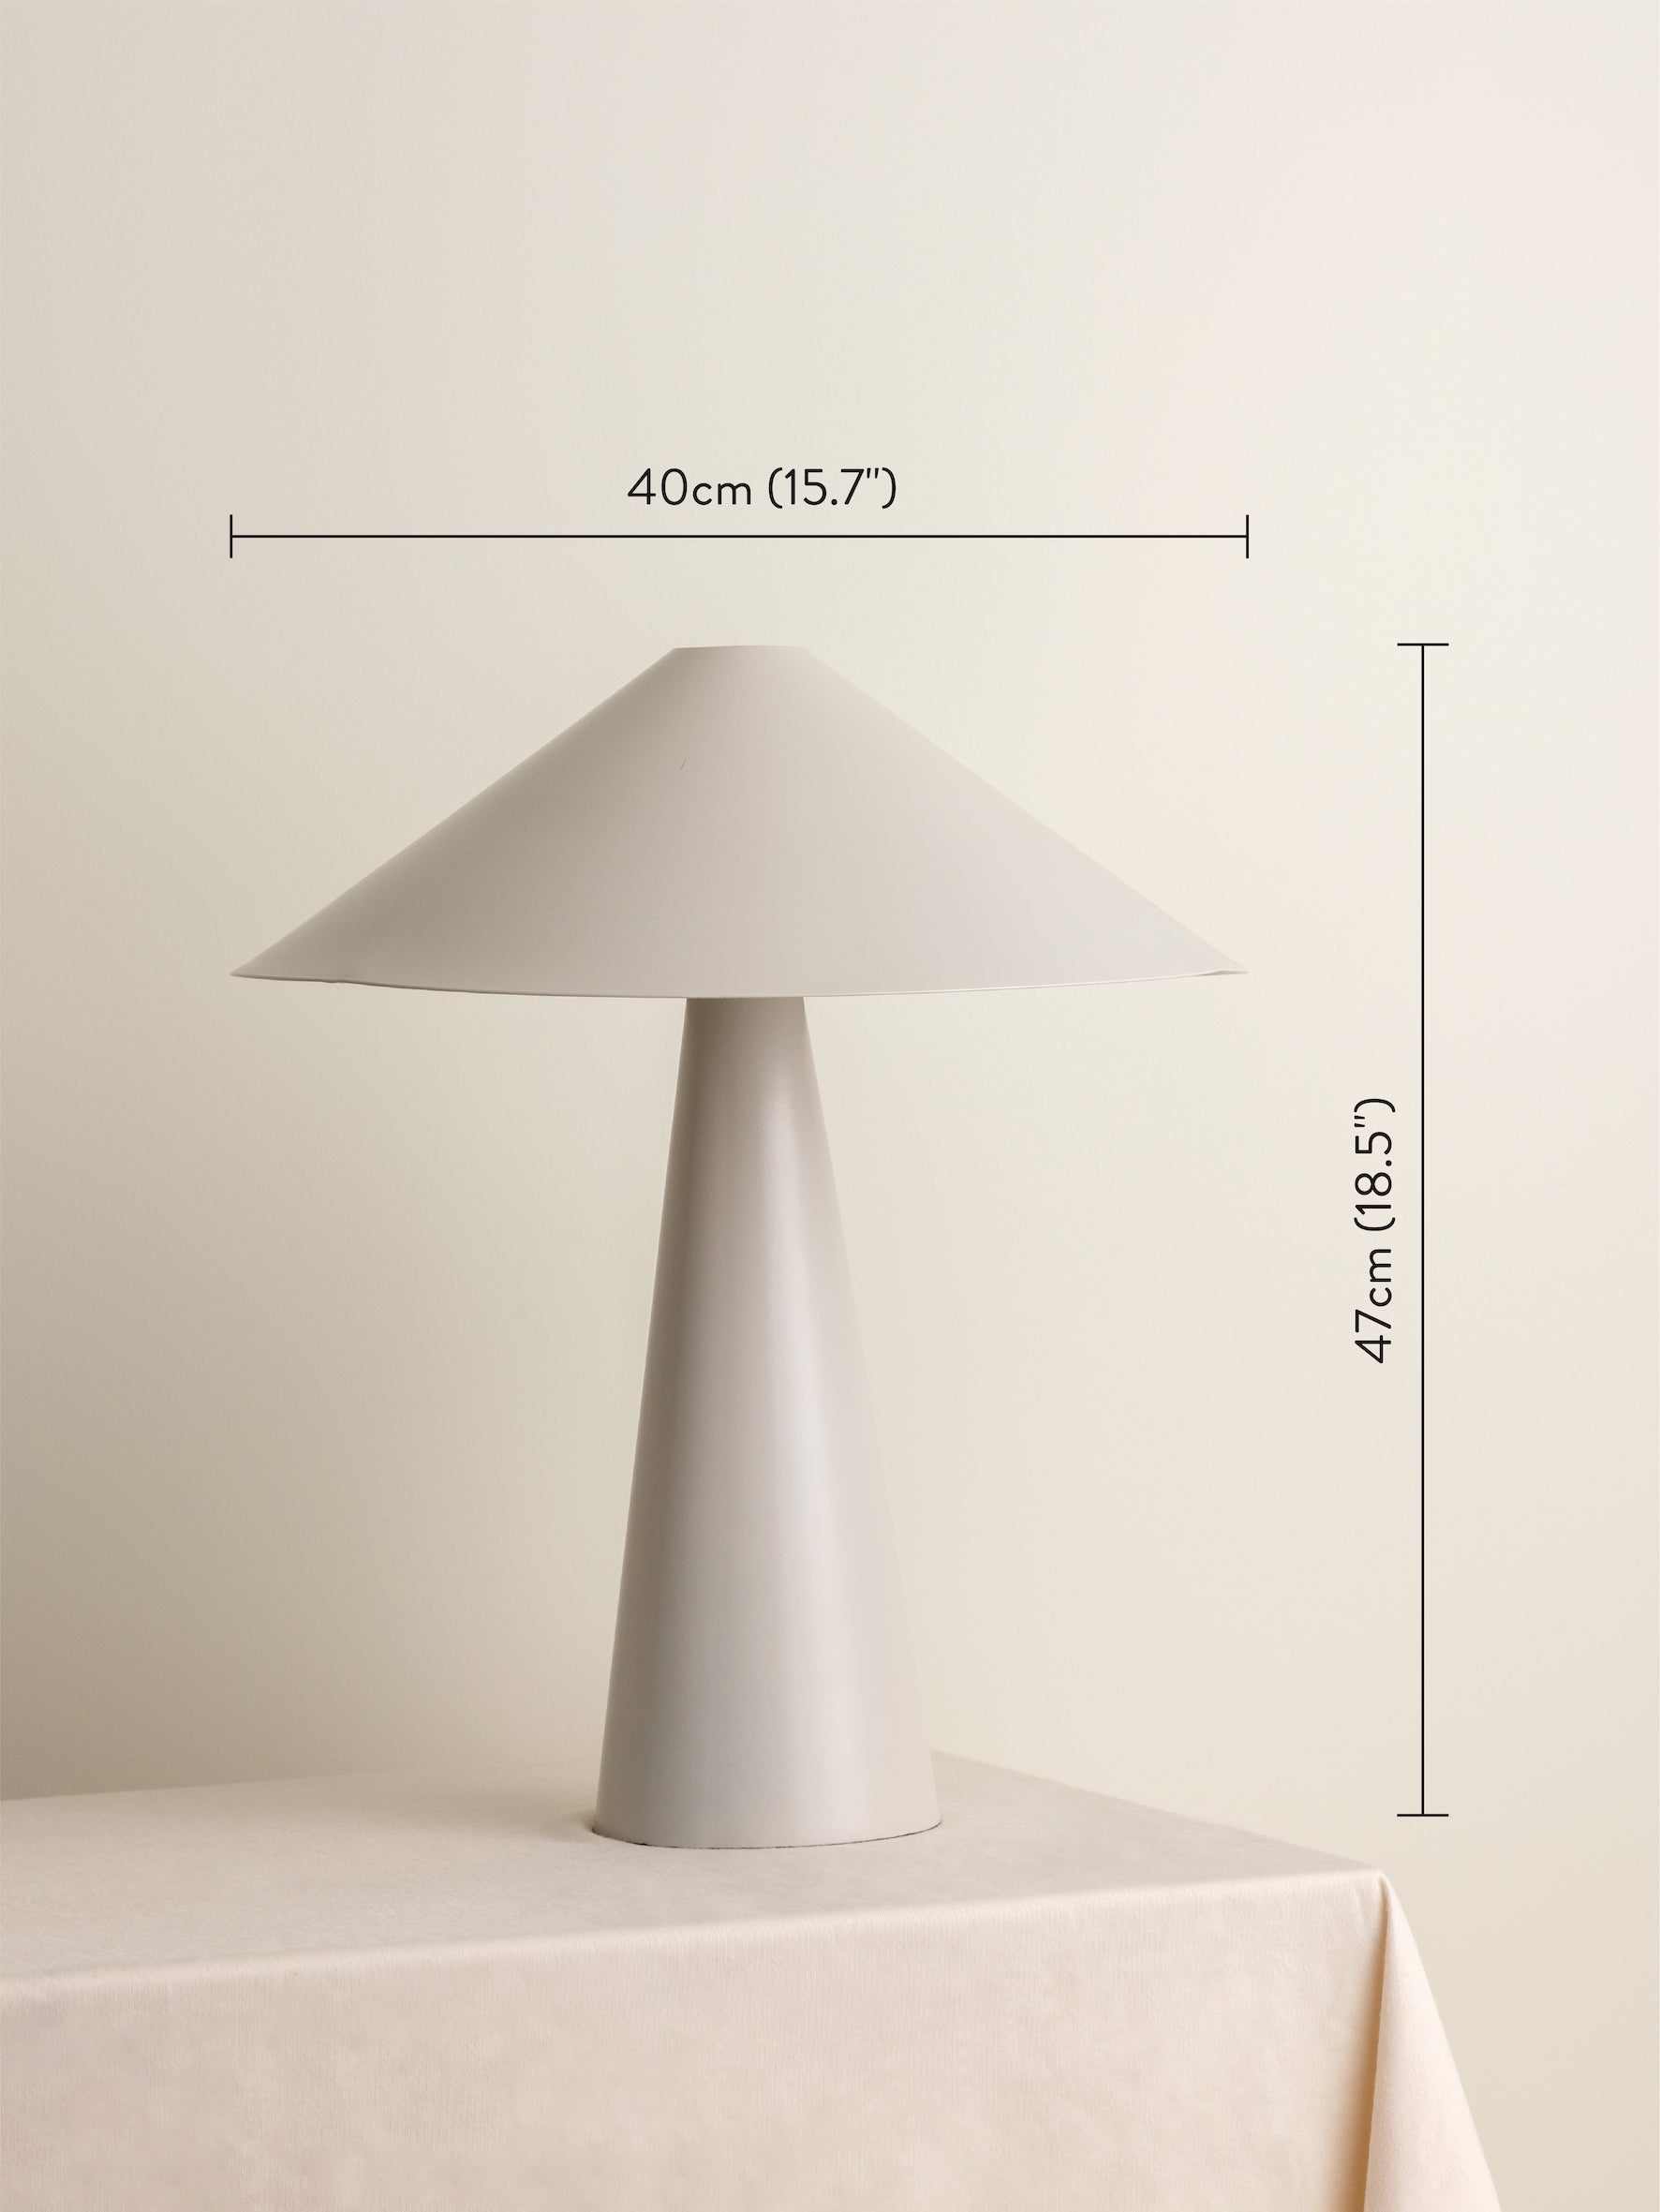 Orta - 1 light warm white cone table lamp | Table Lamp | Lights & Lamps | UK | Modern Affordable Designer Lighting